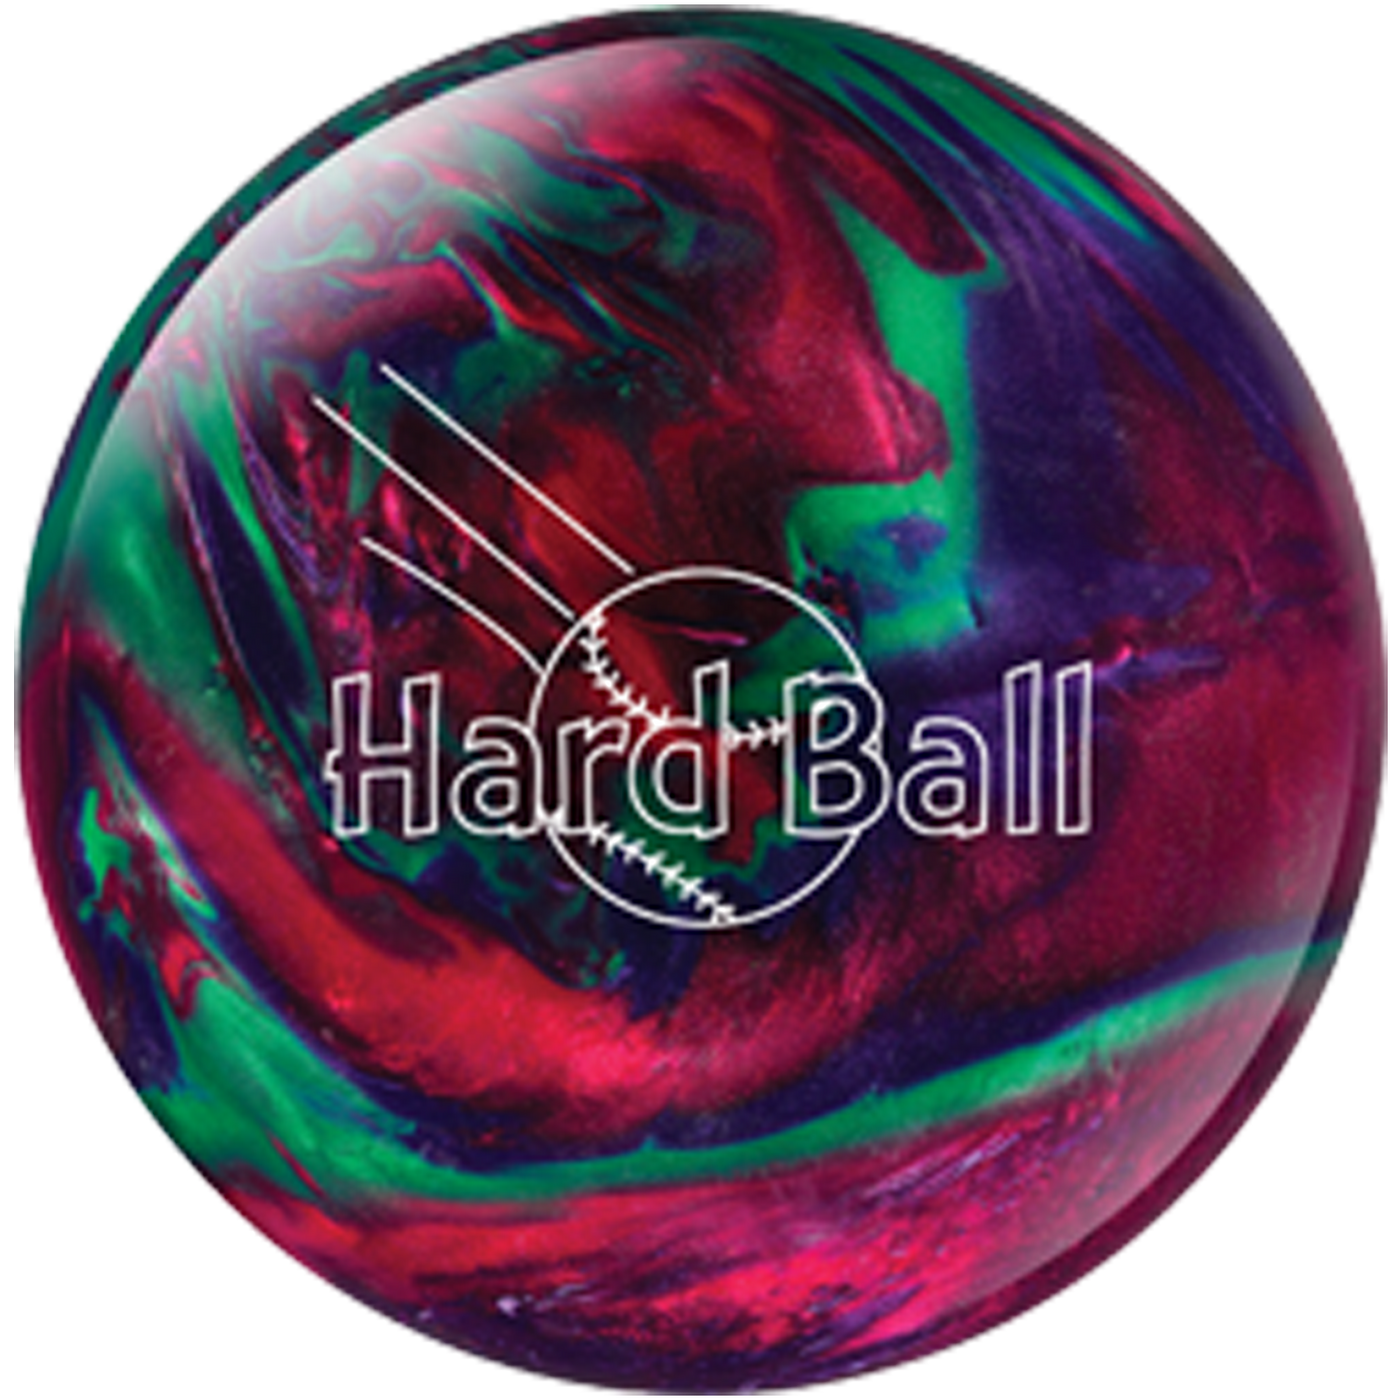 Hard Ball Bowling Ball